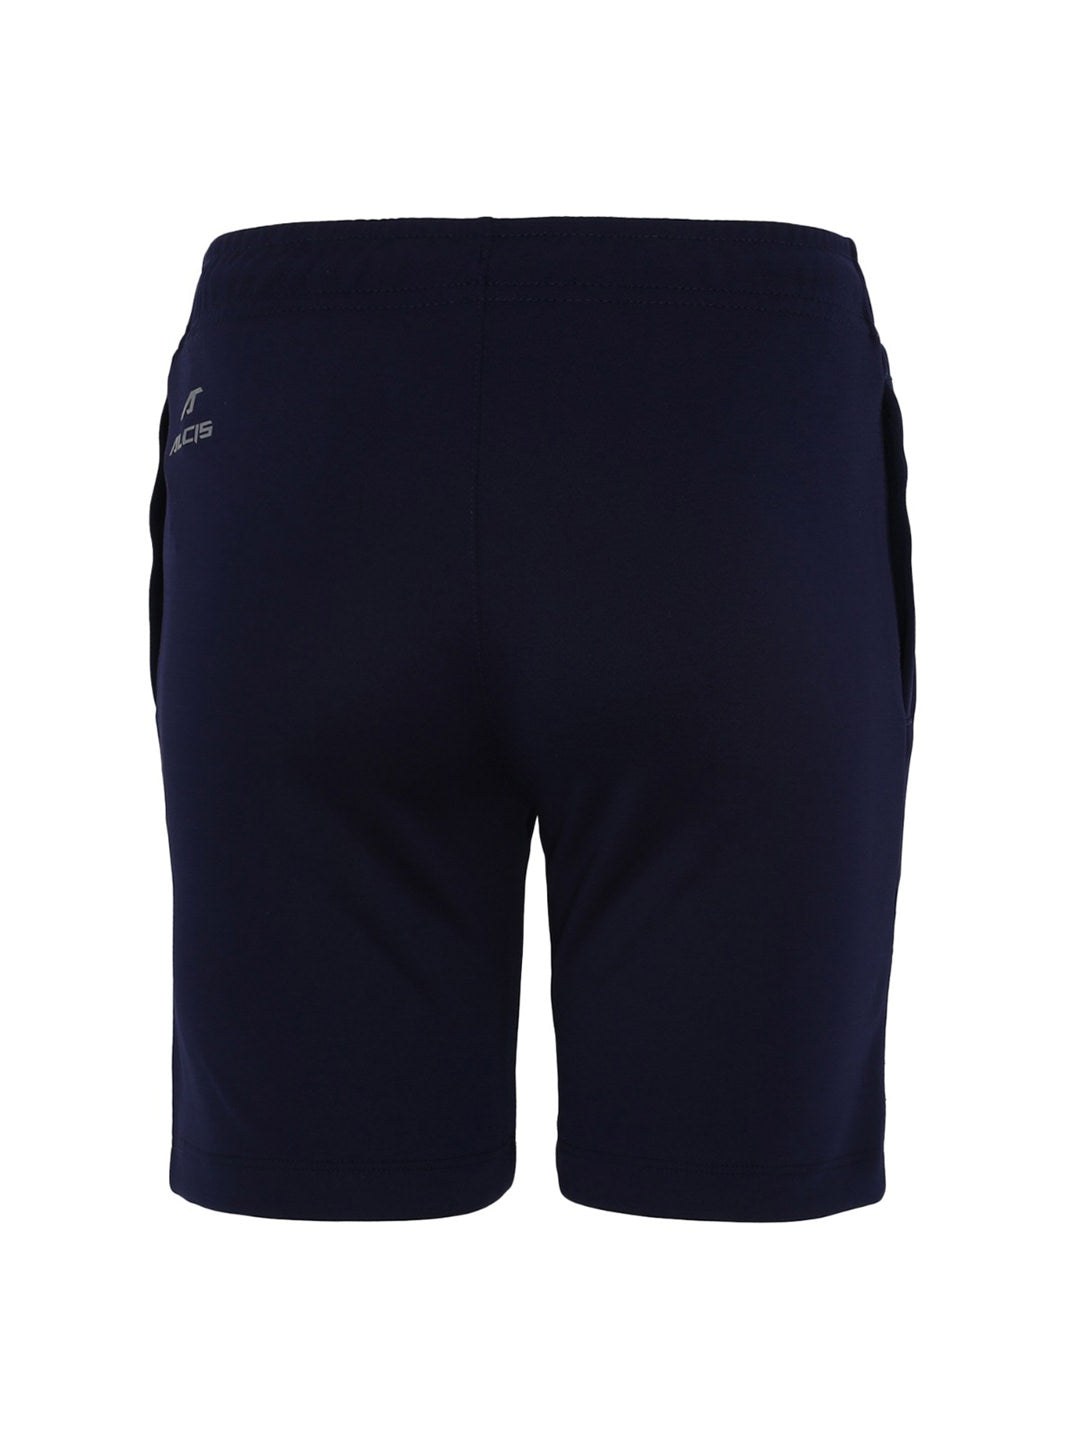 Alcis Boys Navy Blue Solid Slim Fit Rajasthan Royals Sports Shorts